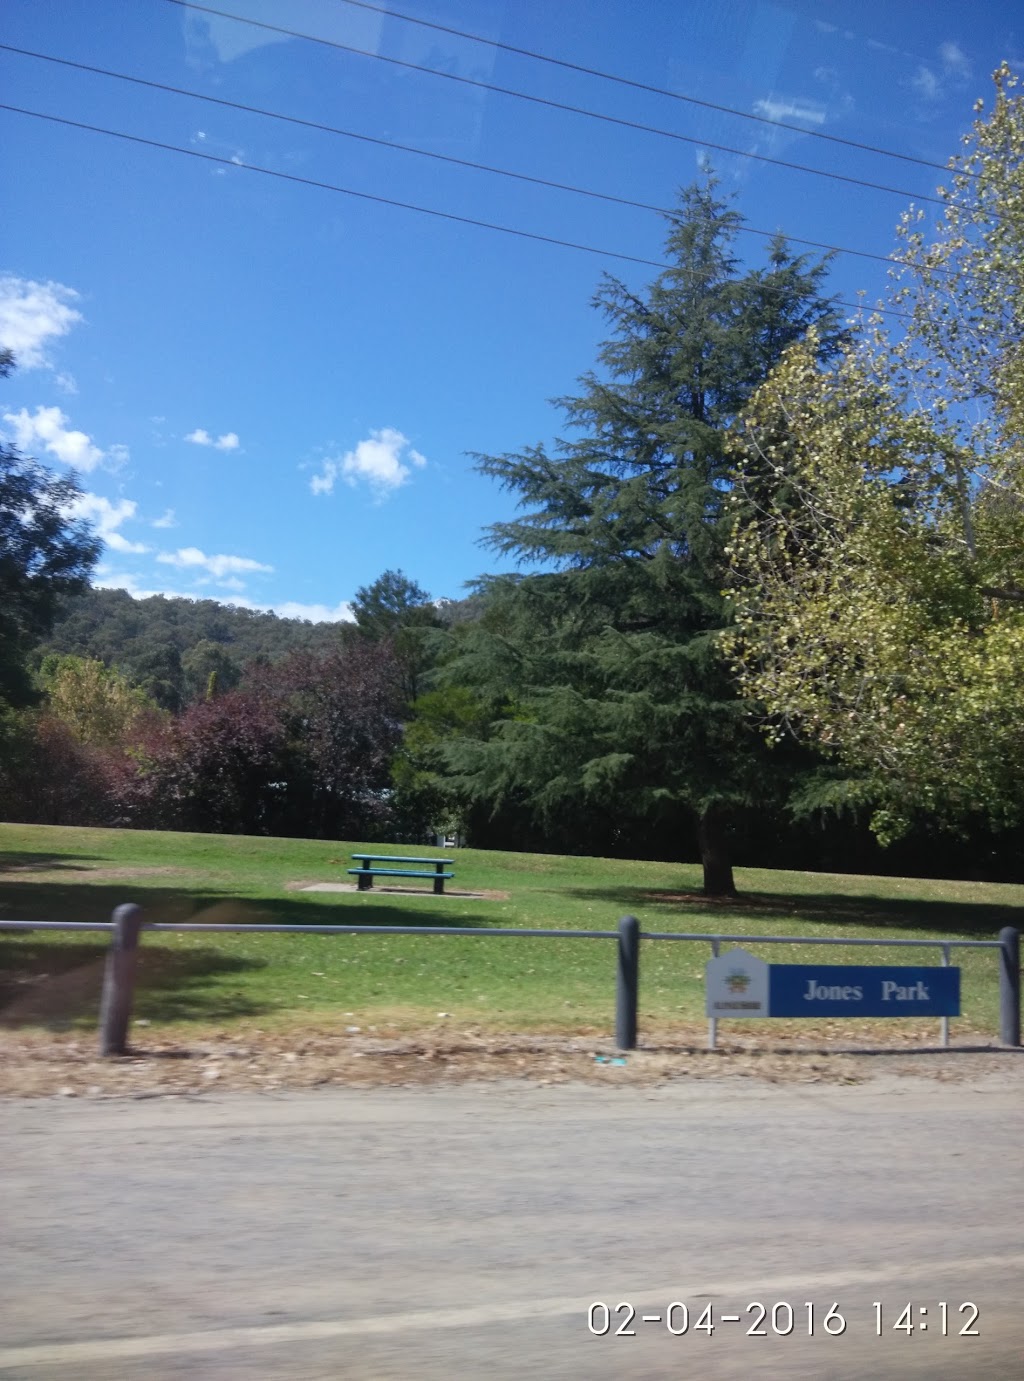 Jones Park | park | Murray to Mountains Rail Trail, Myrtleford VIC 3737, Australia